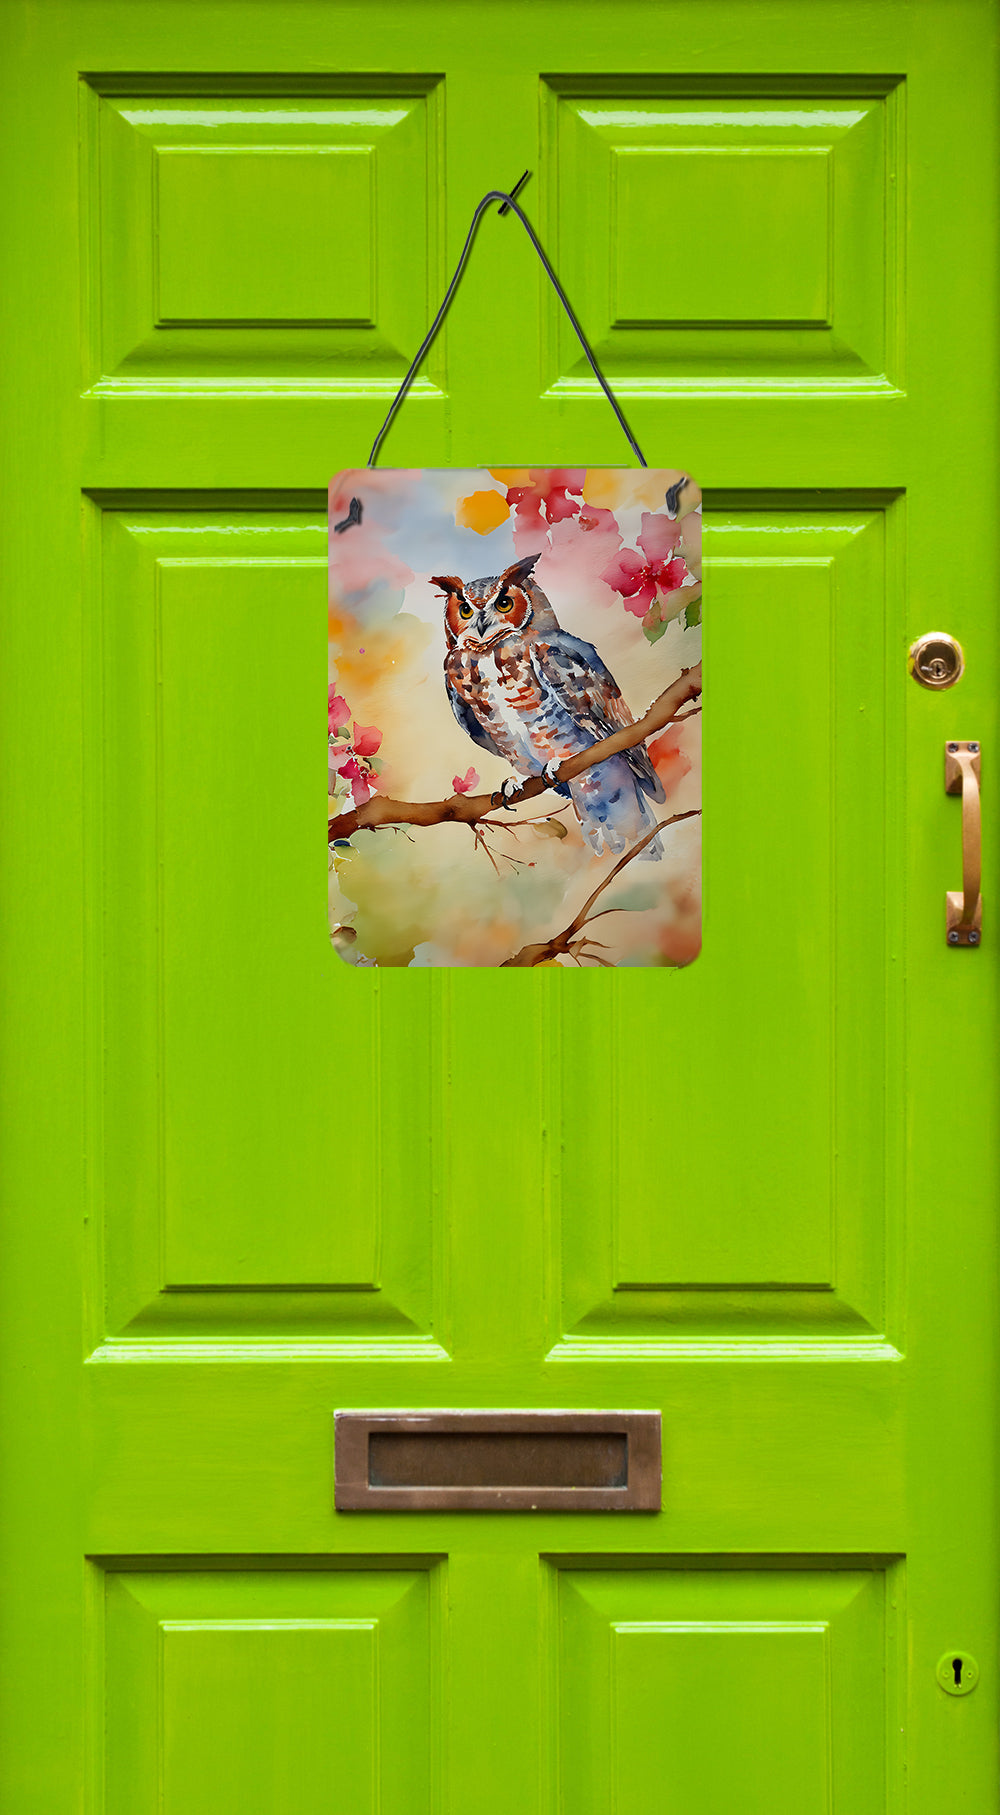 Buy this Eastern Screech Owl Wall or Door Hanging Prints